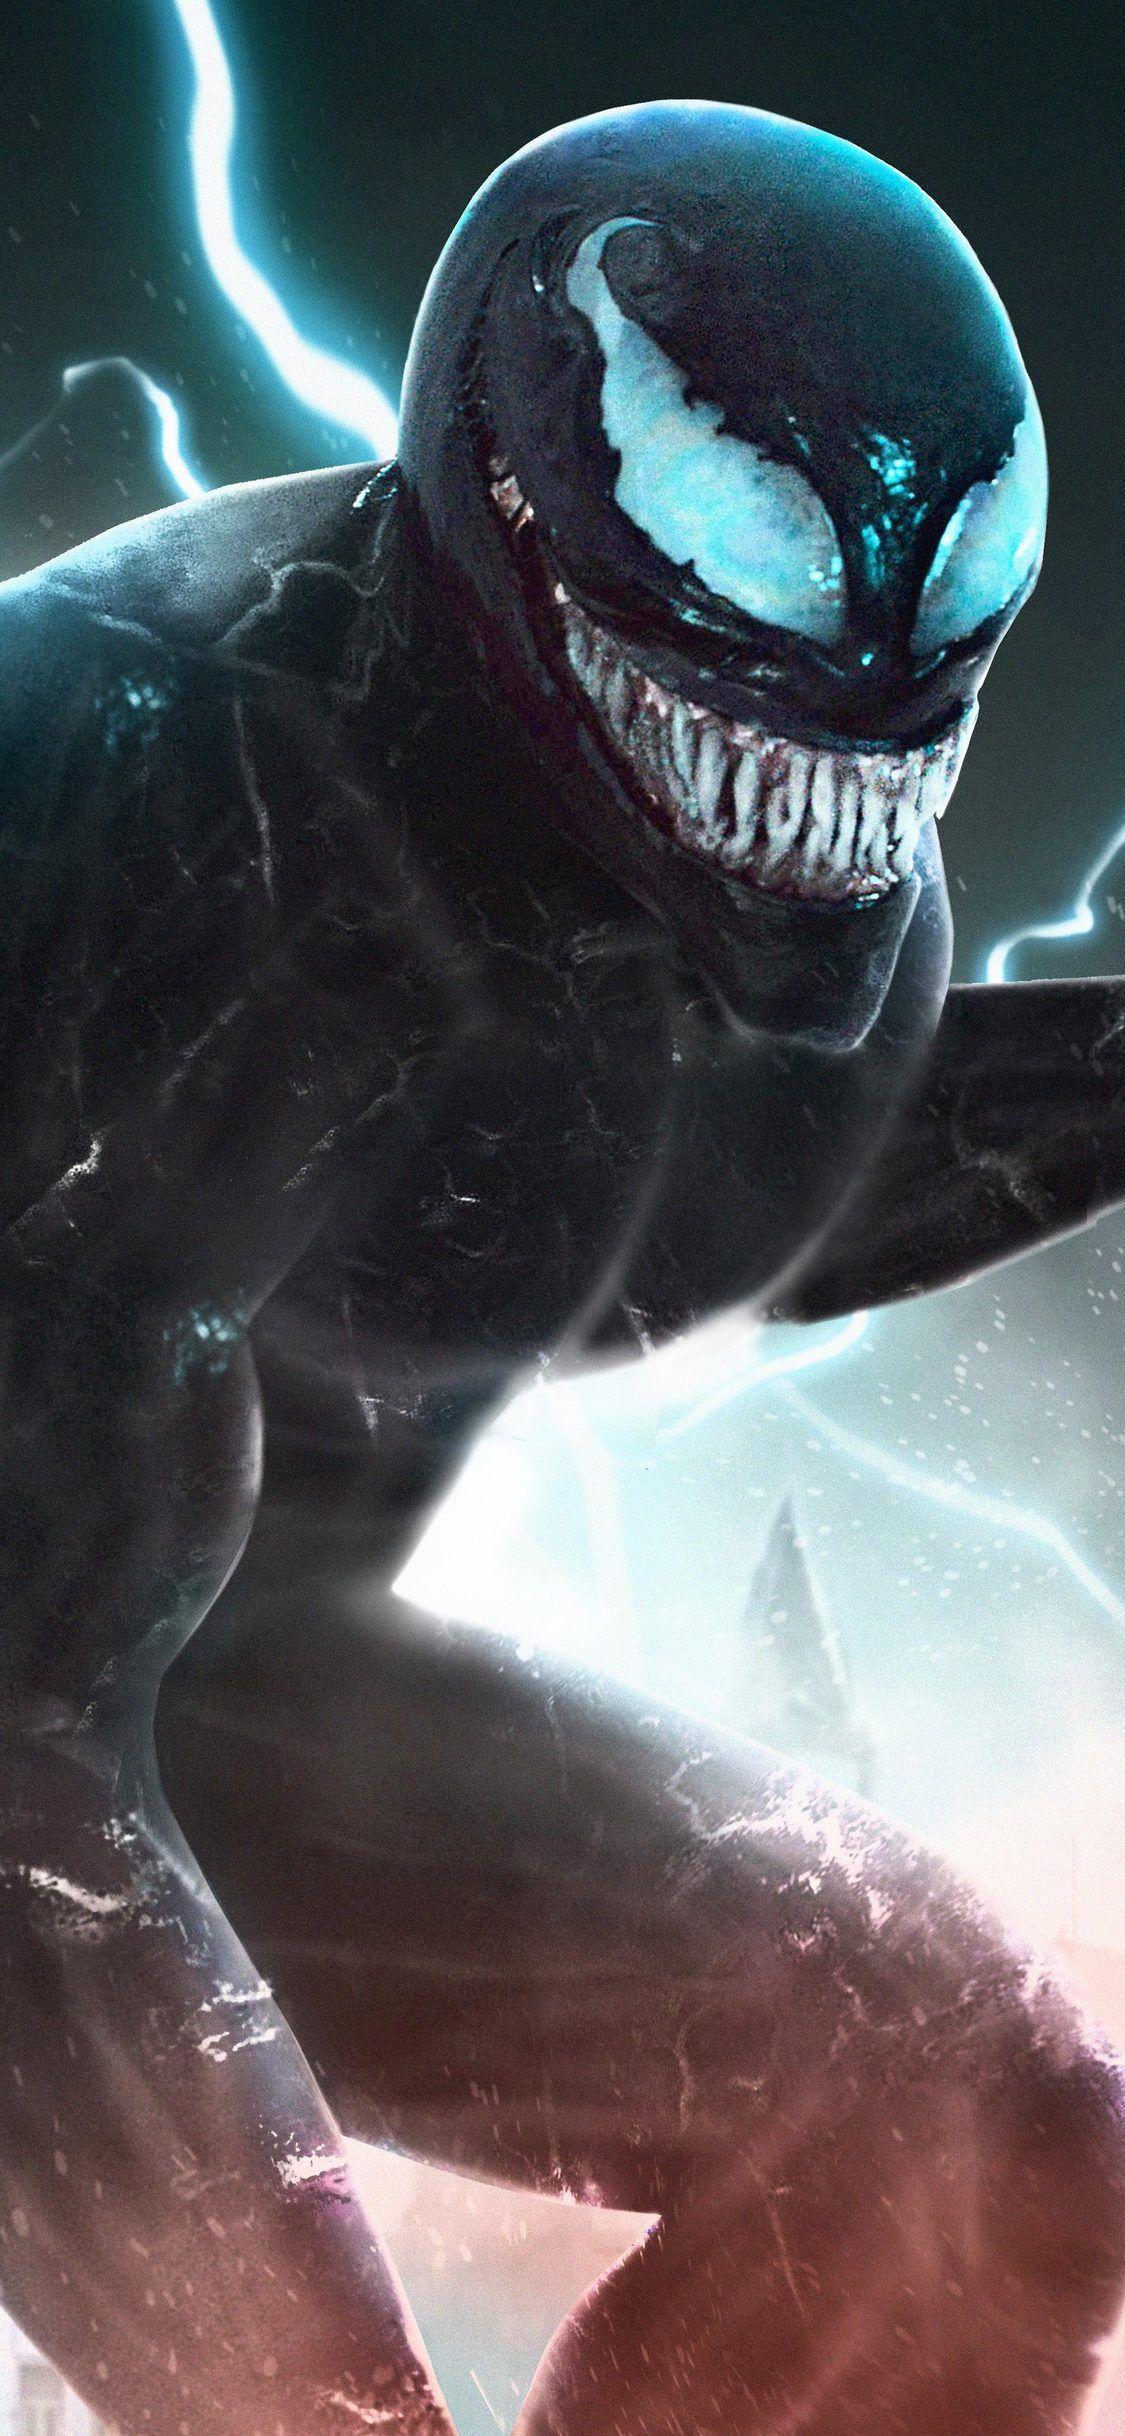 Venom Movie Artwork iPhone X. Venom. Venom movie, Marvel